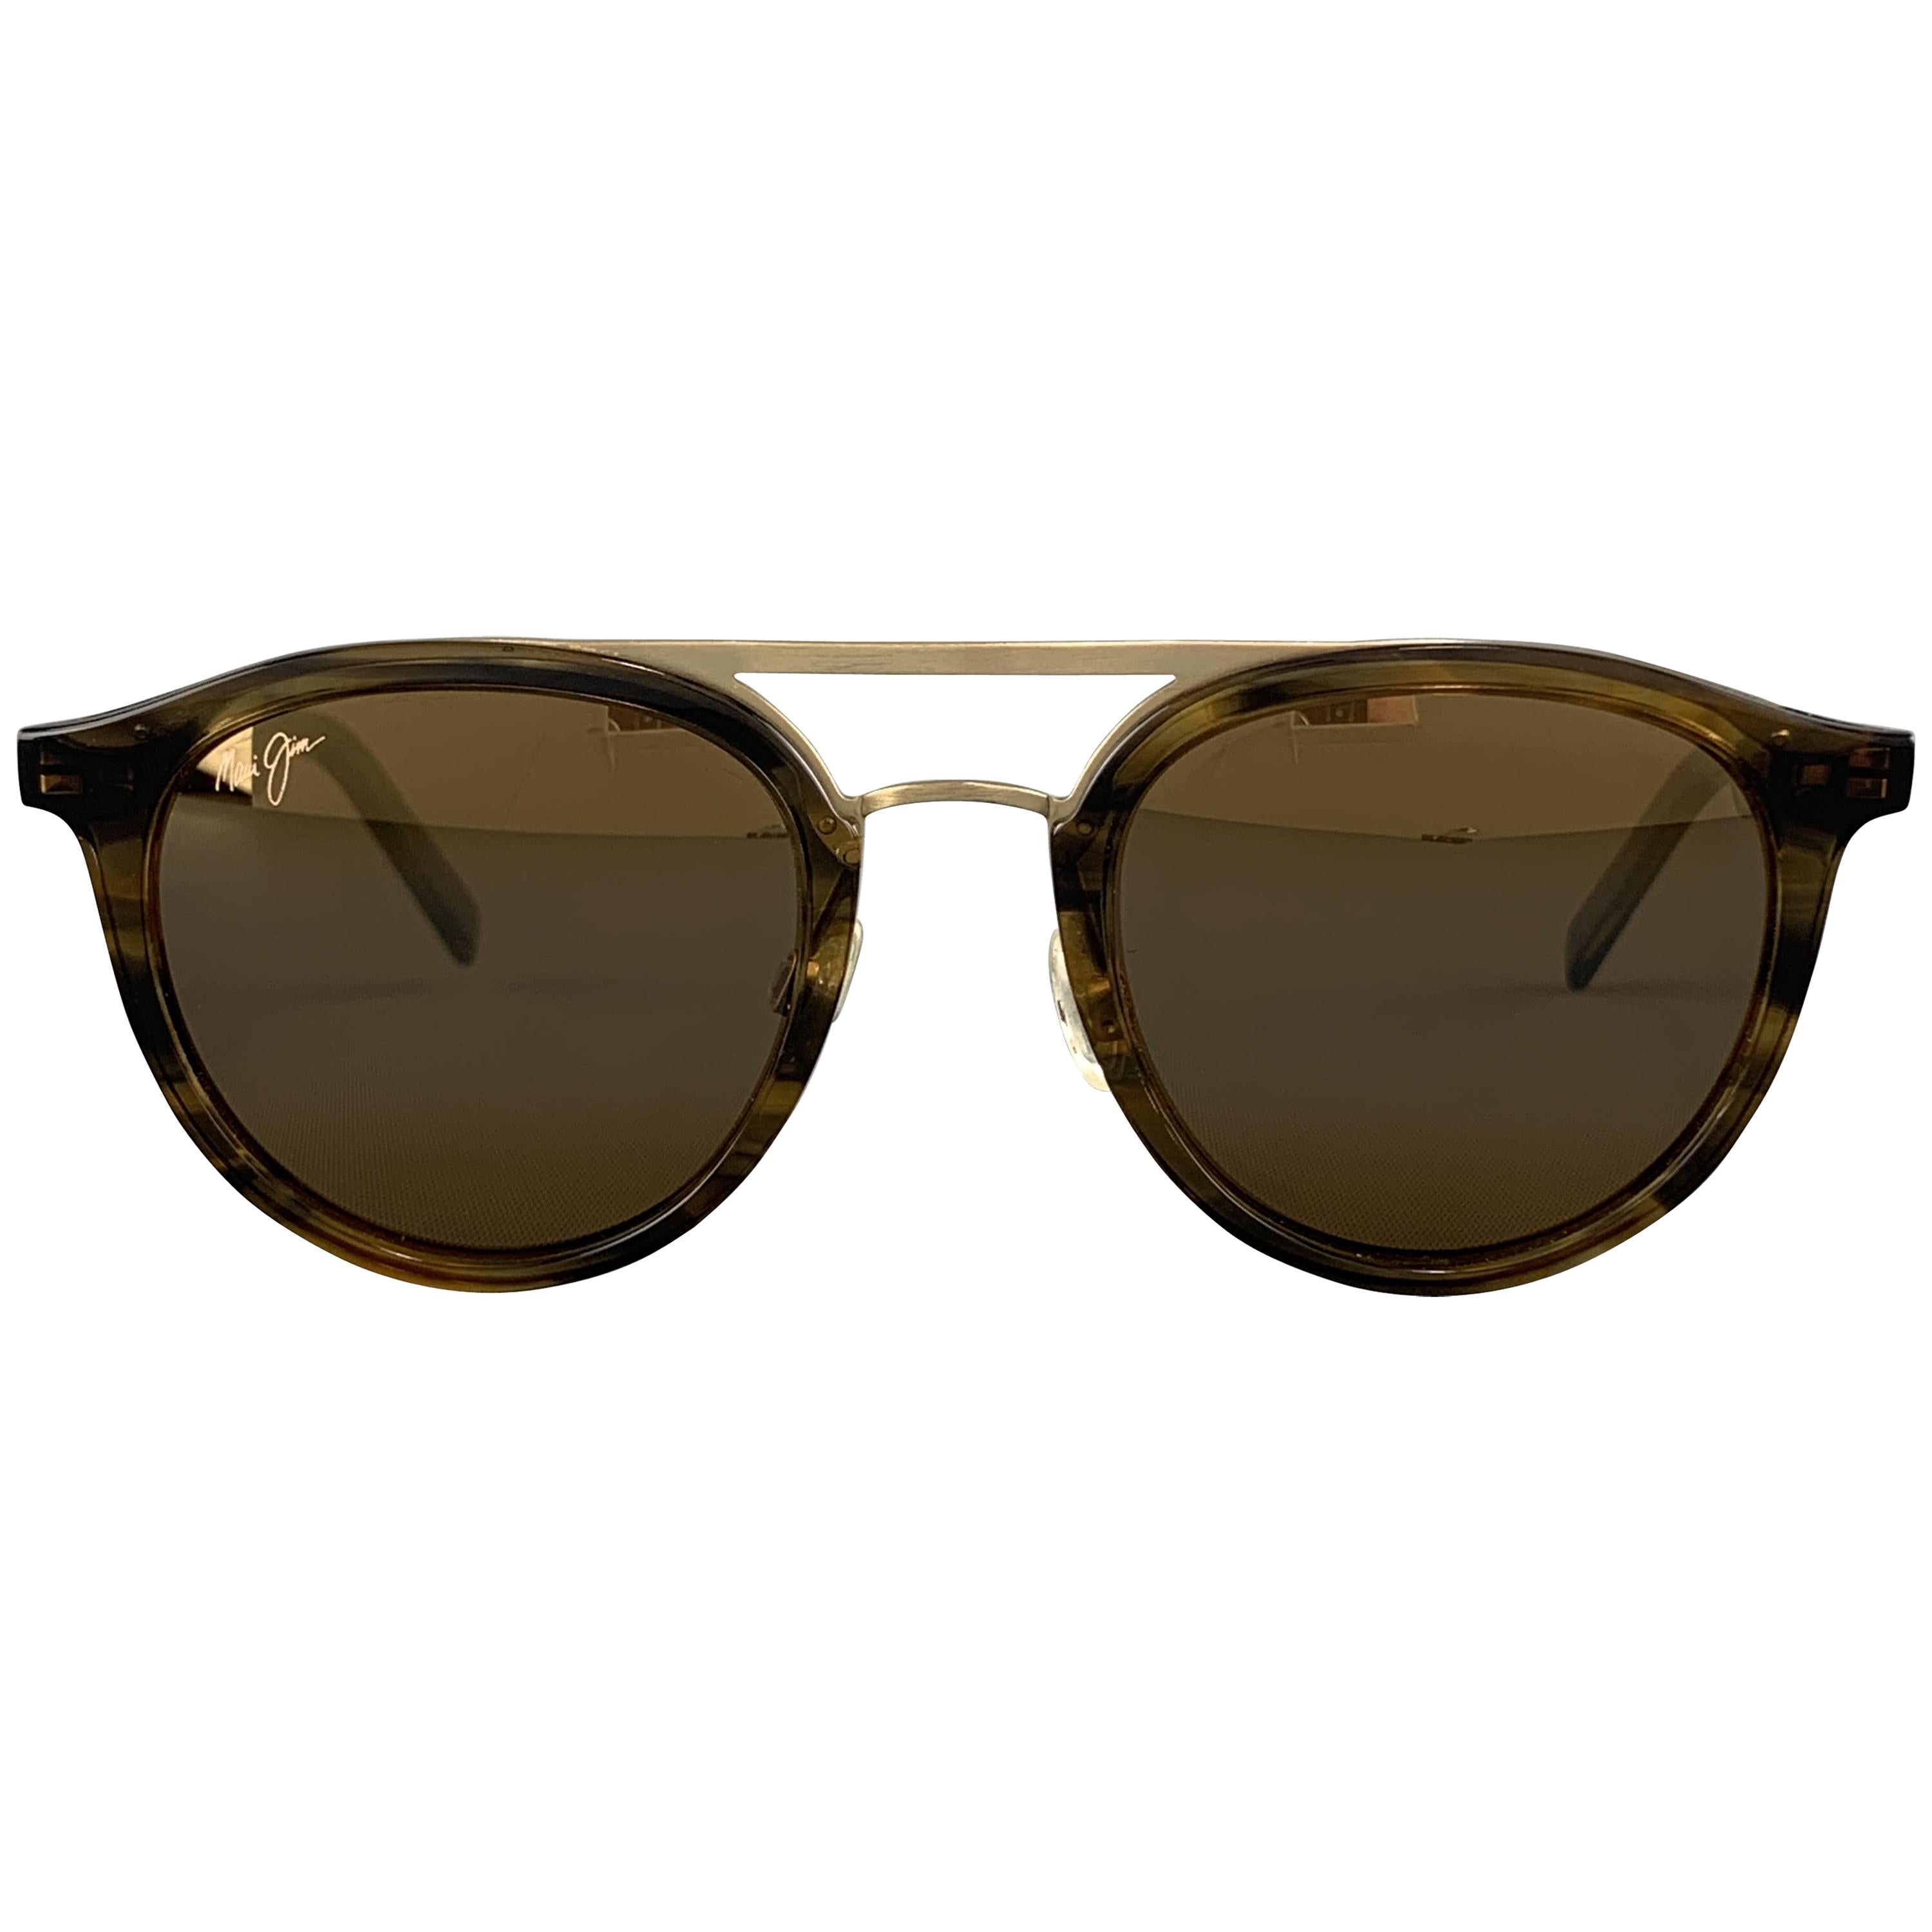 MAUI JIM Brown Tortoiseshell Acetate & Gold Tone Metal Sunglasses